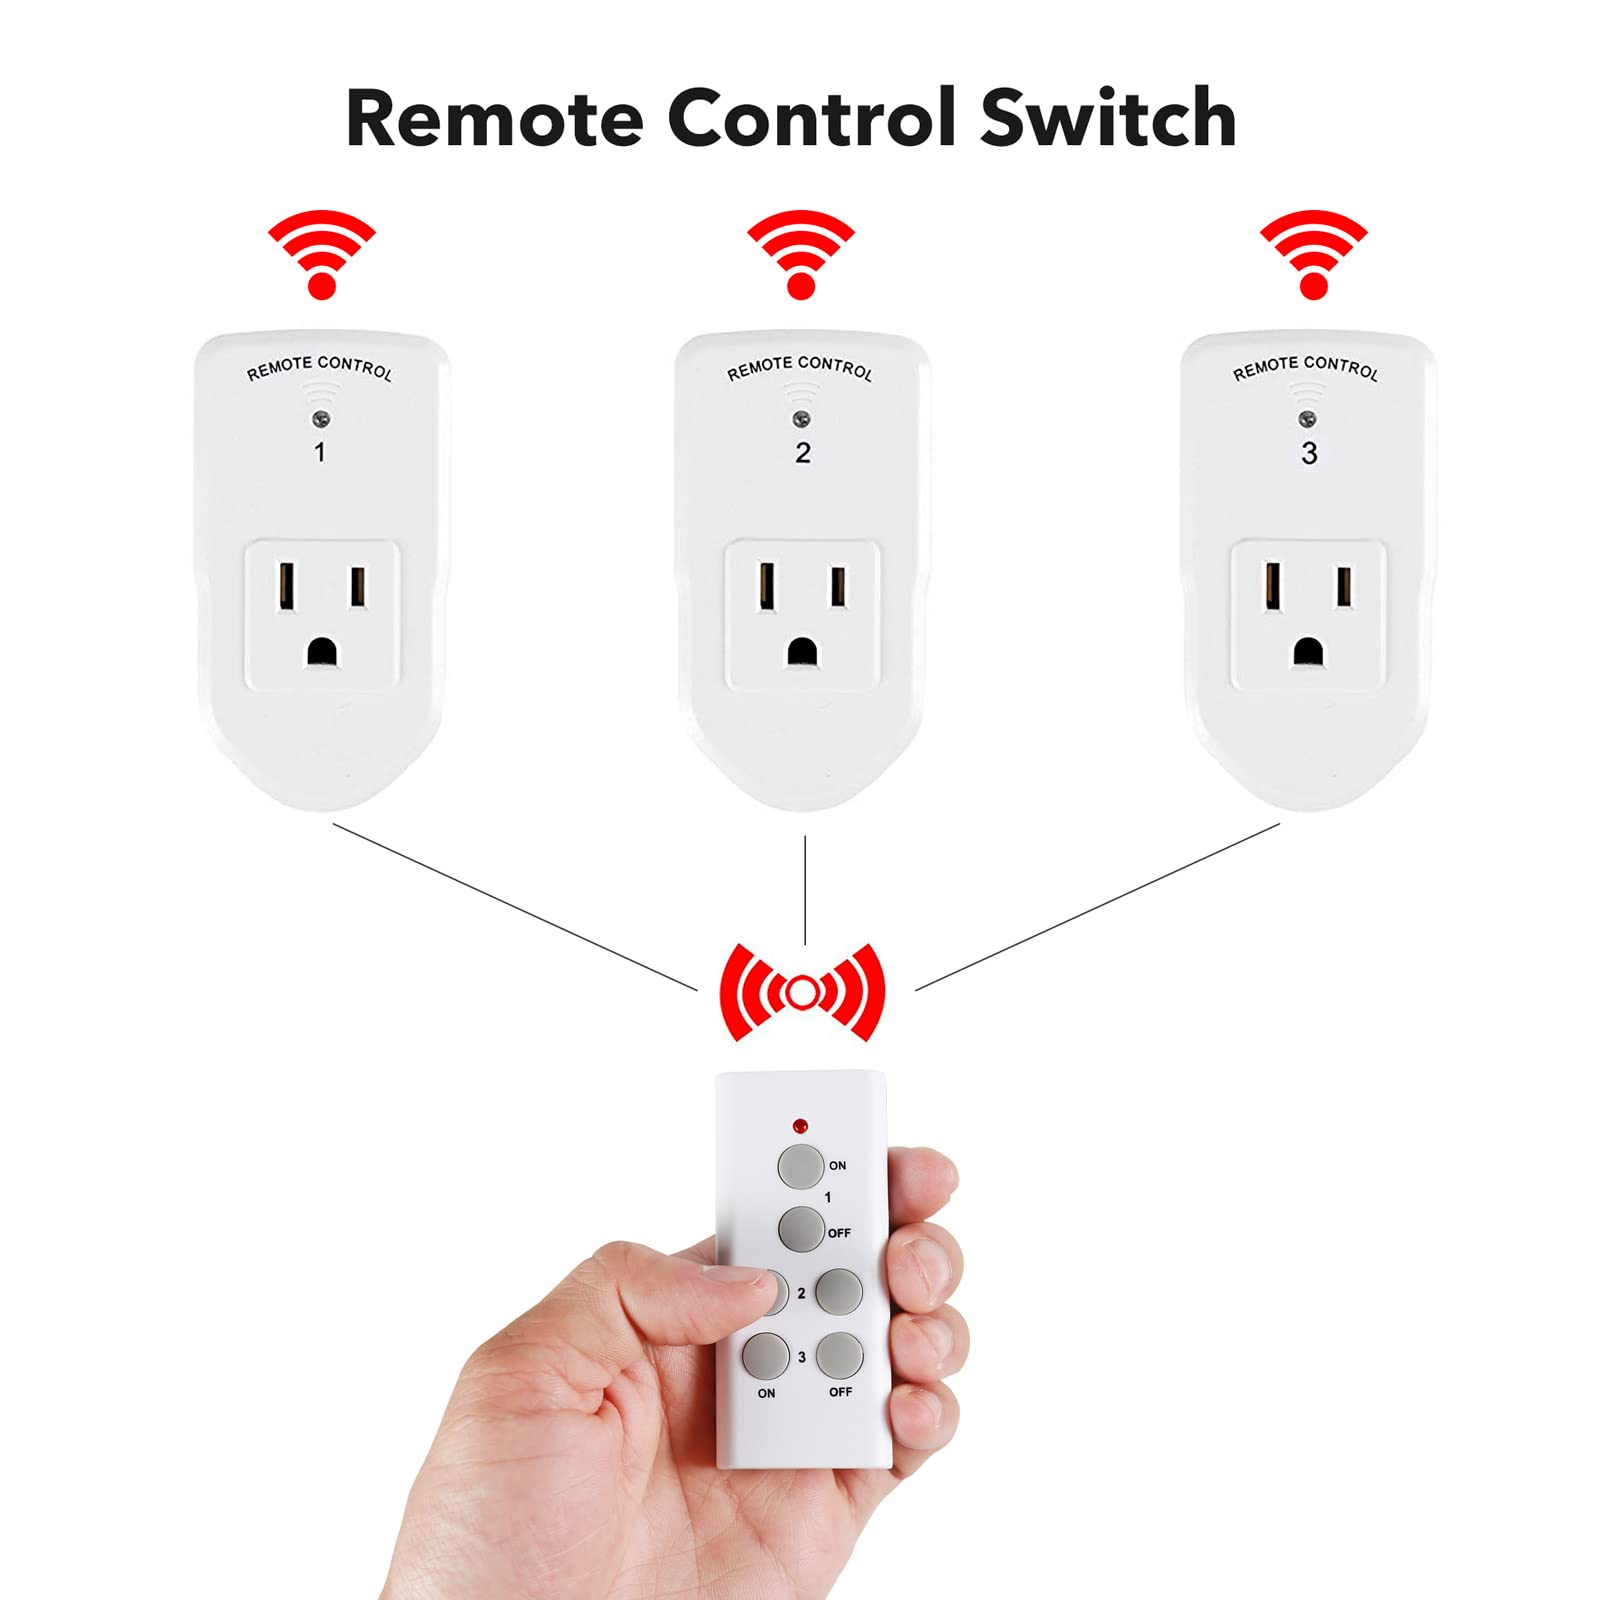 Remote Control Power Switch